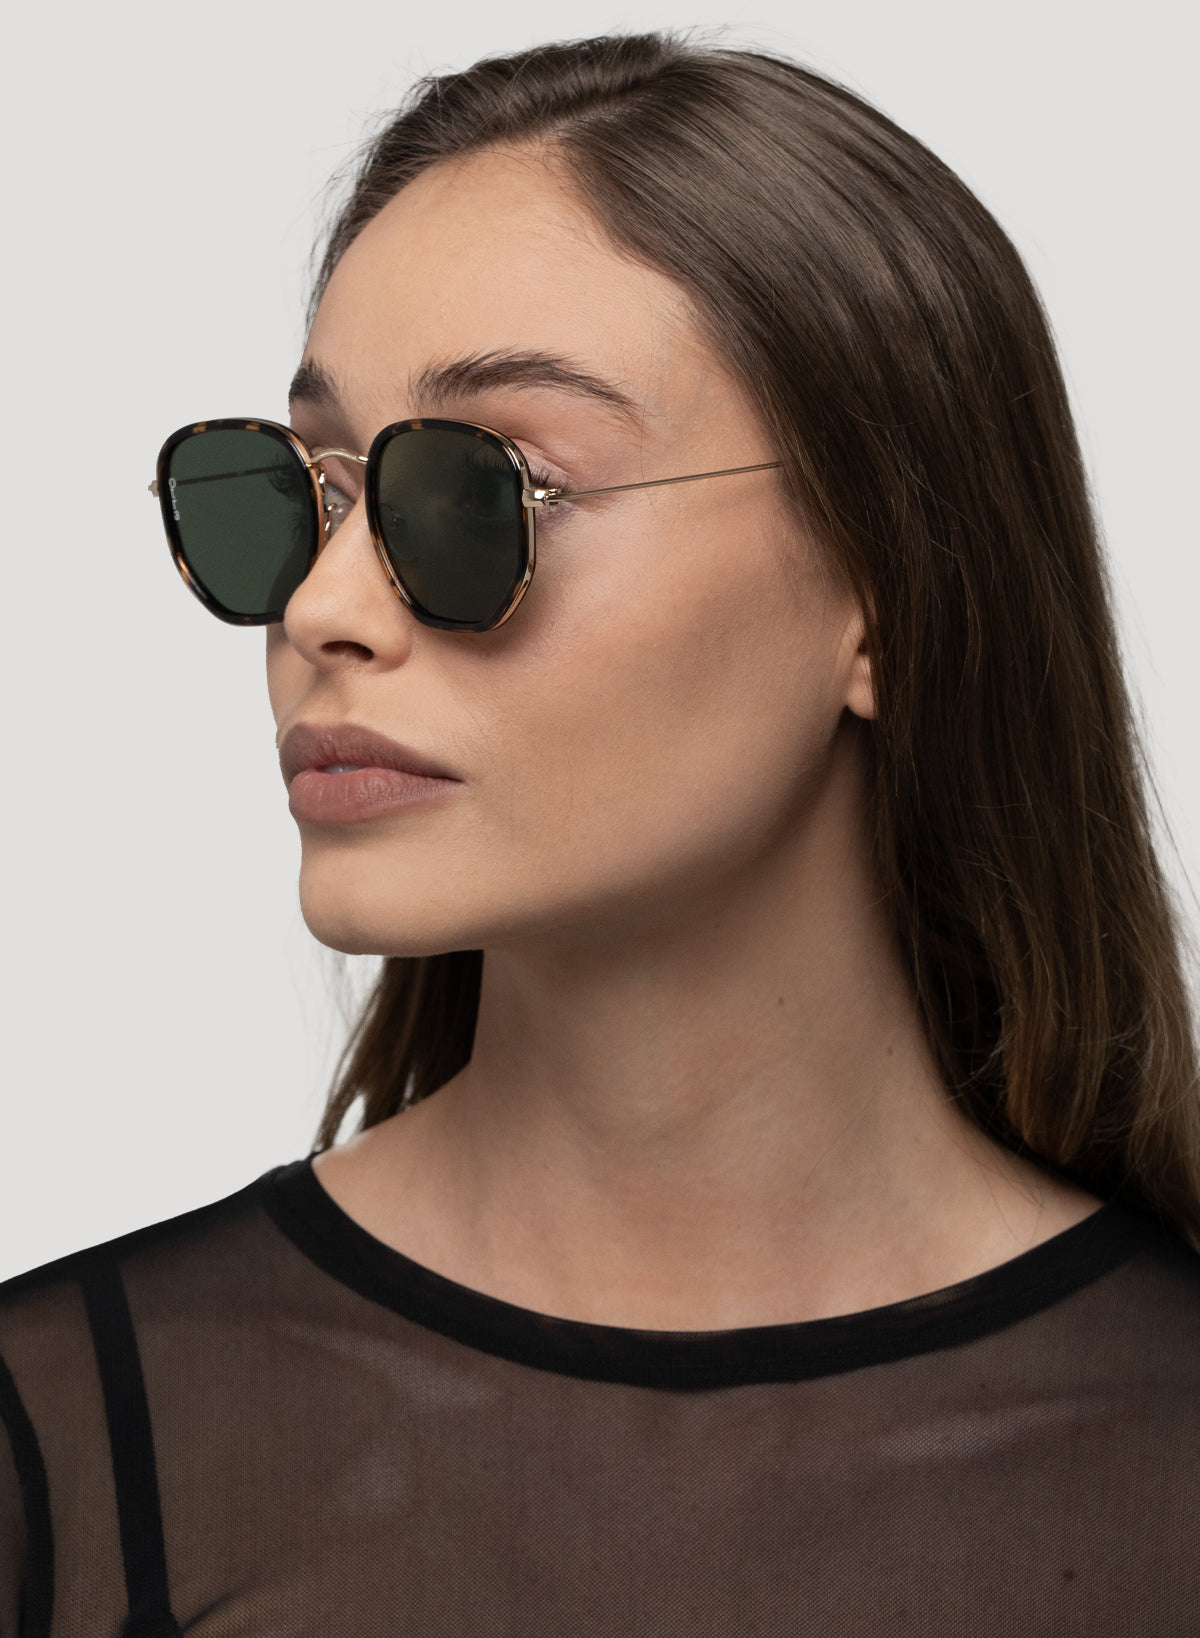 Side view of model wearing Tate glasses in tortoiseshell